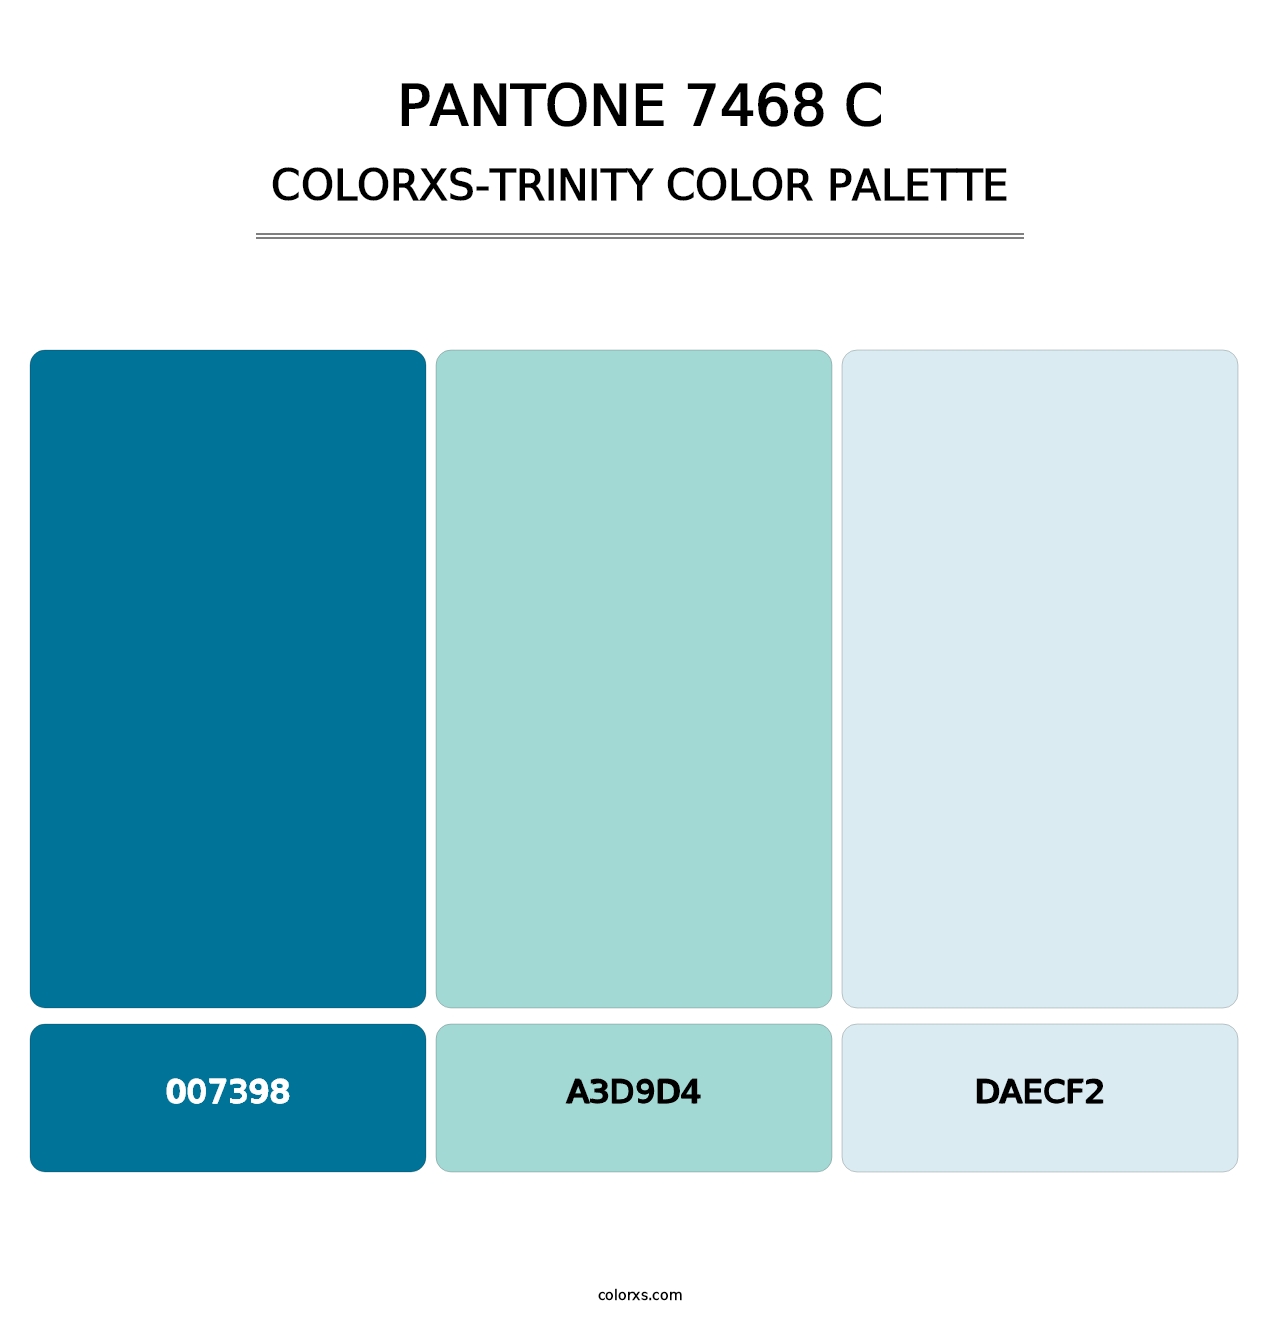 PANTONE 7468 C - Colorxs Trinity Palette